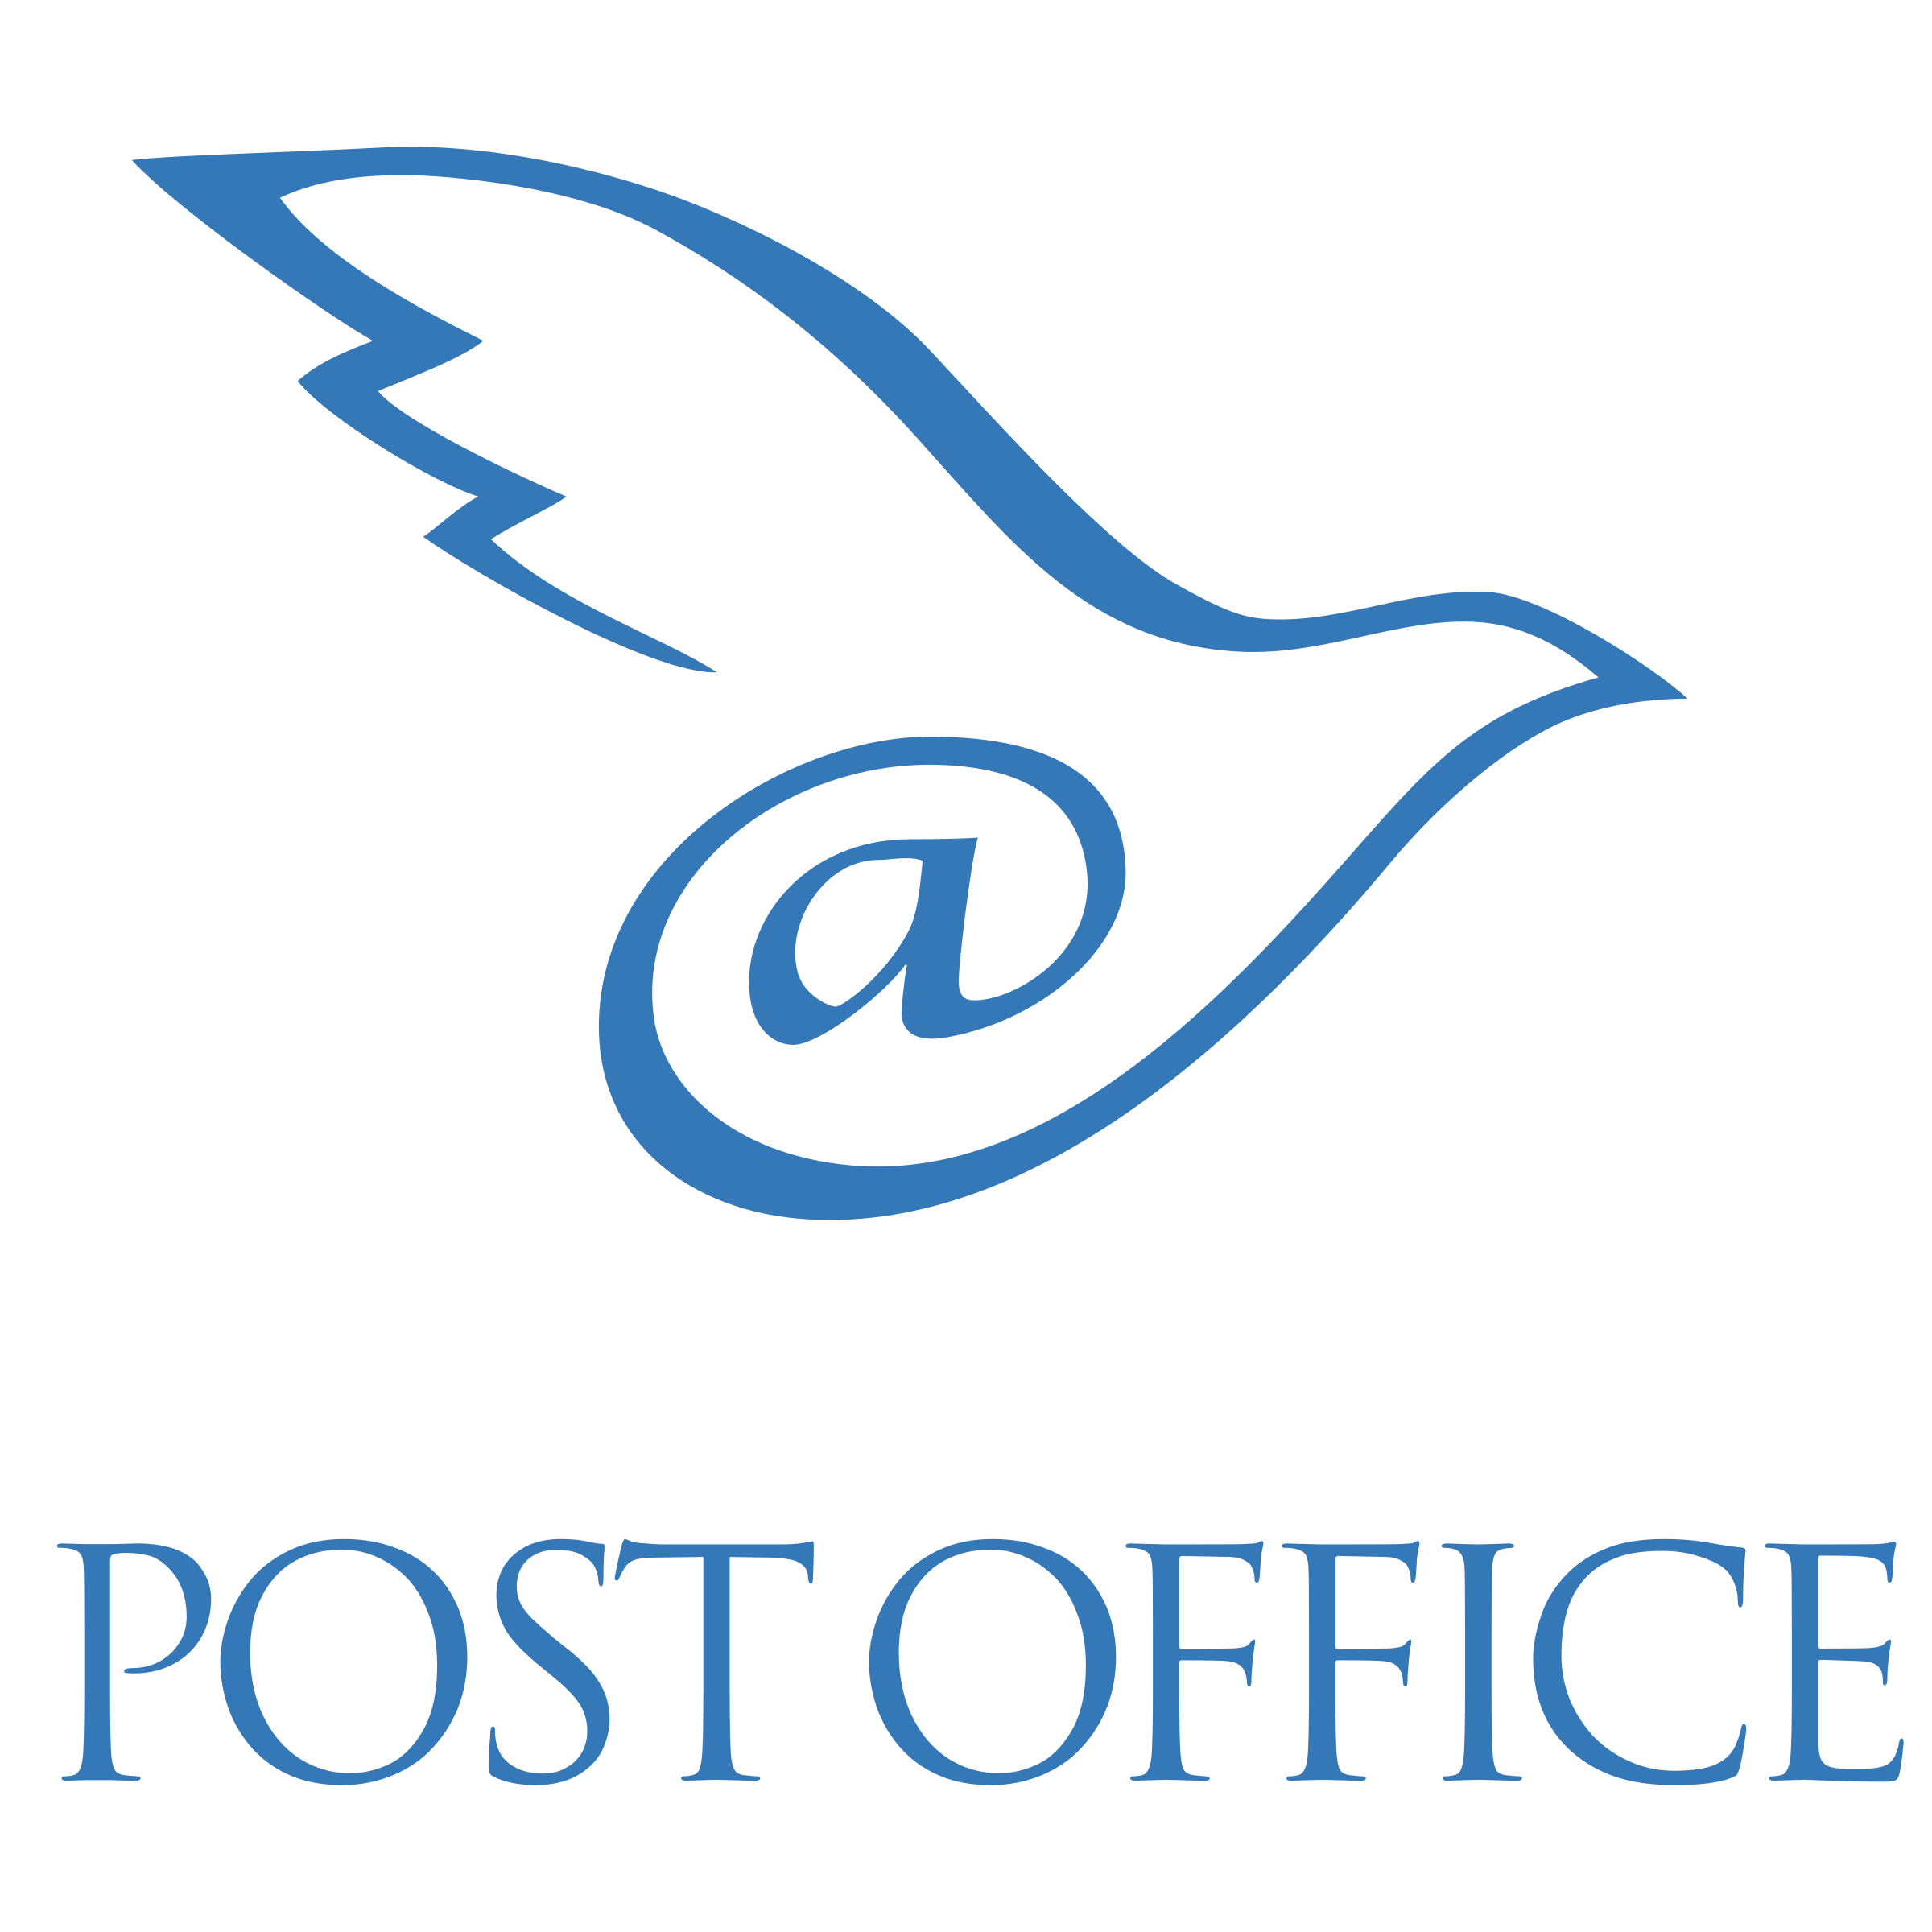 Post Office Logo - Post Office Logo PNG Transparent & SVG Vector - Freebie Supply